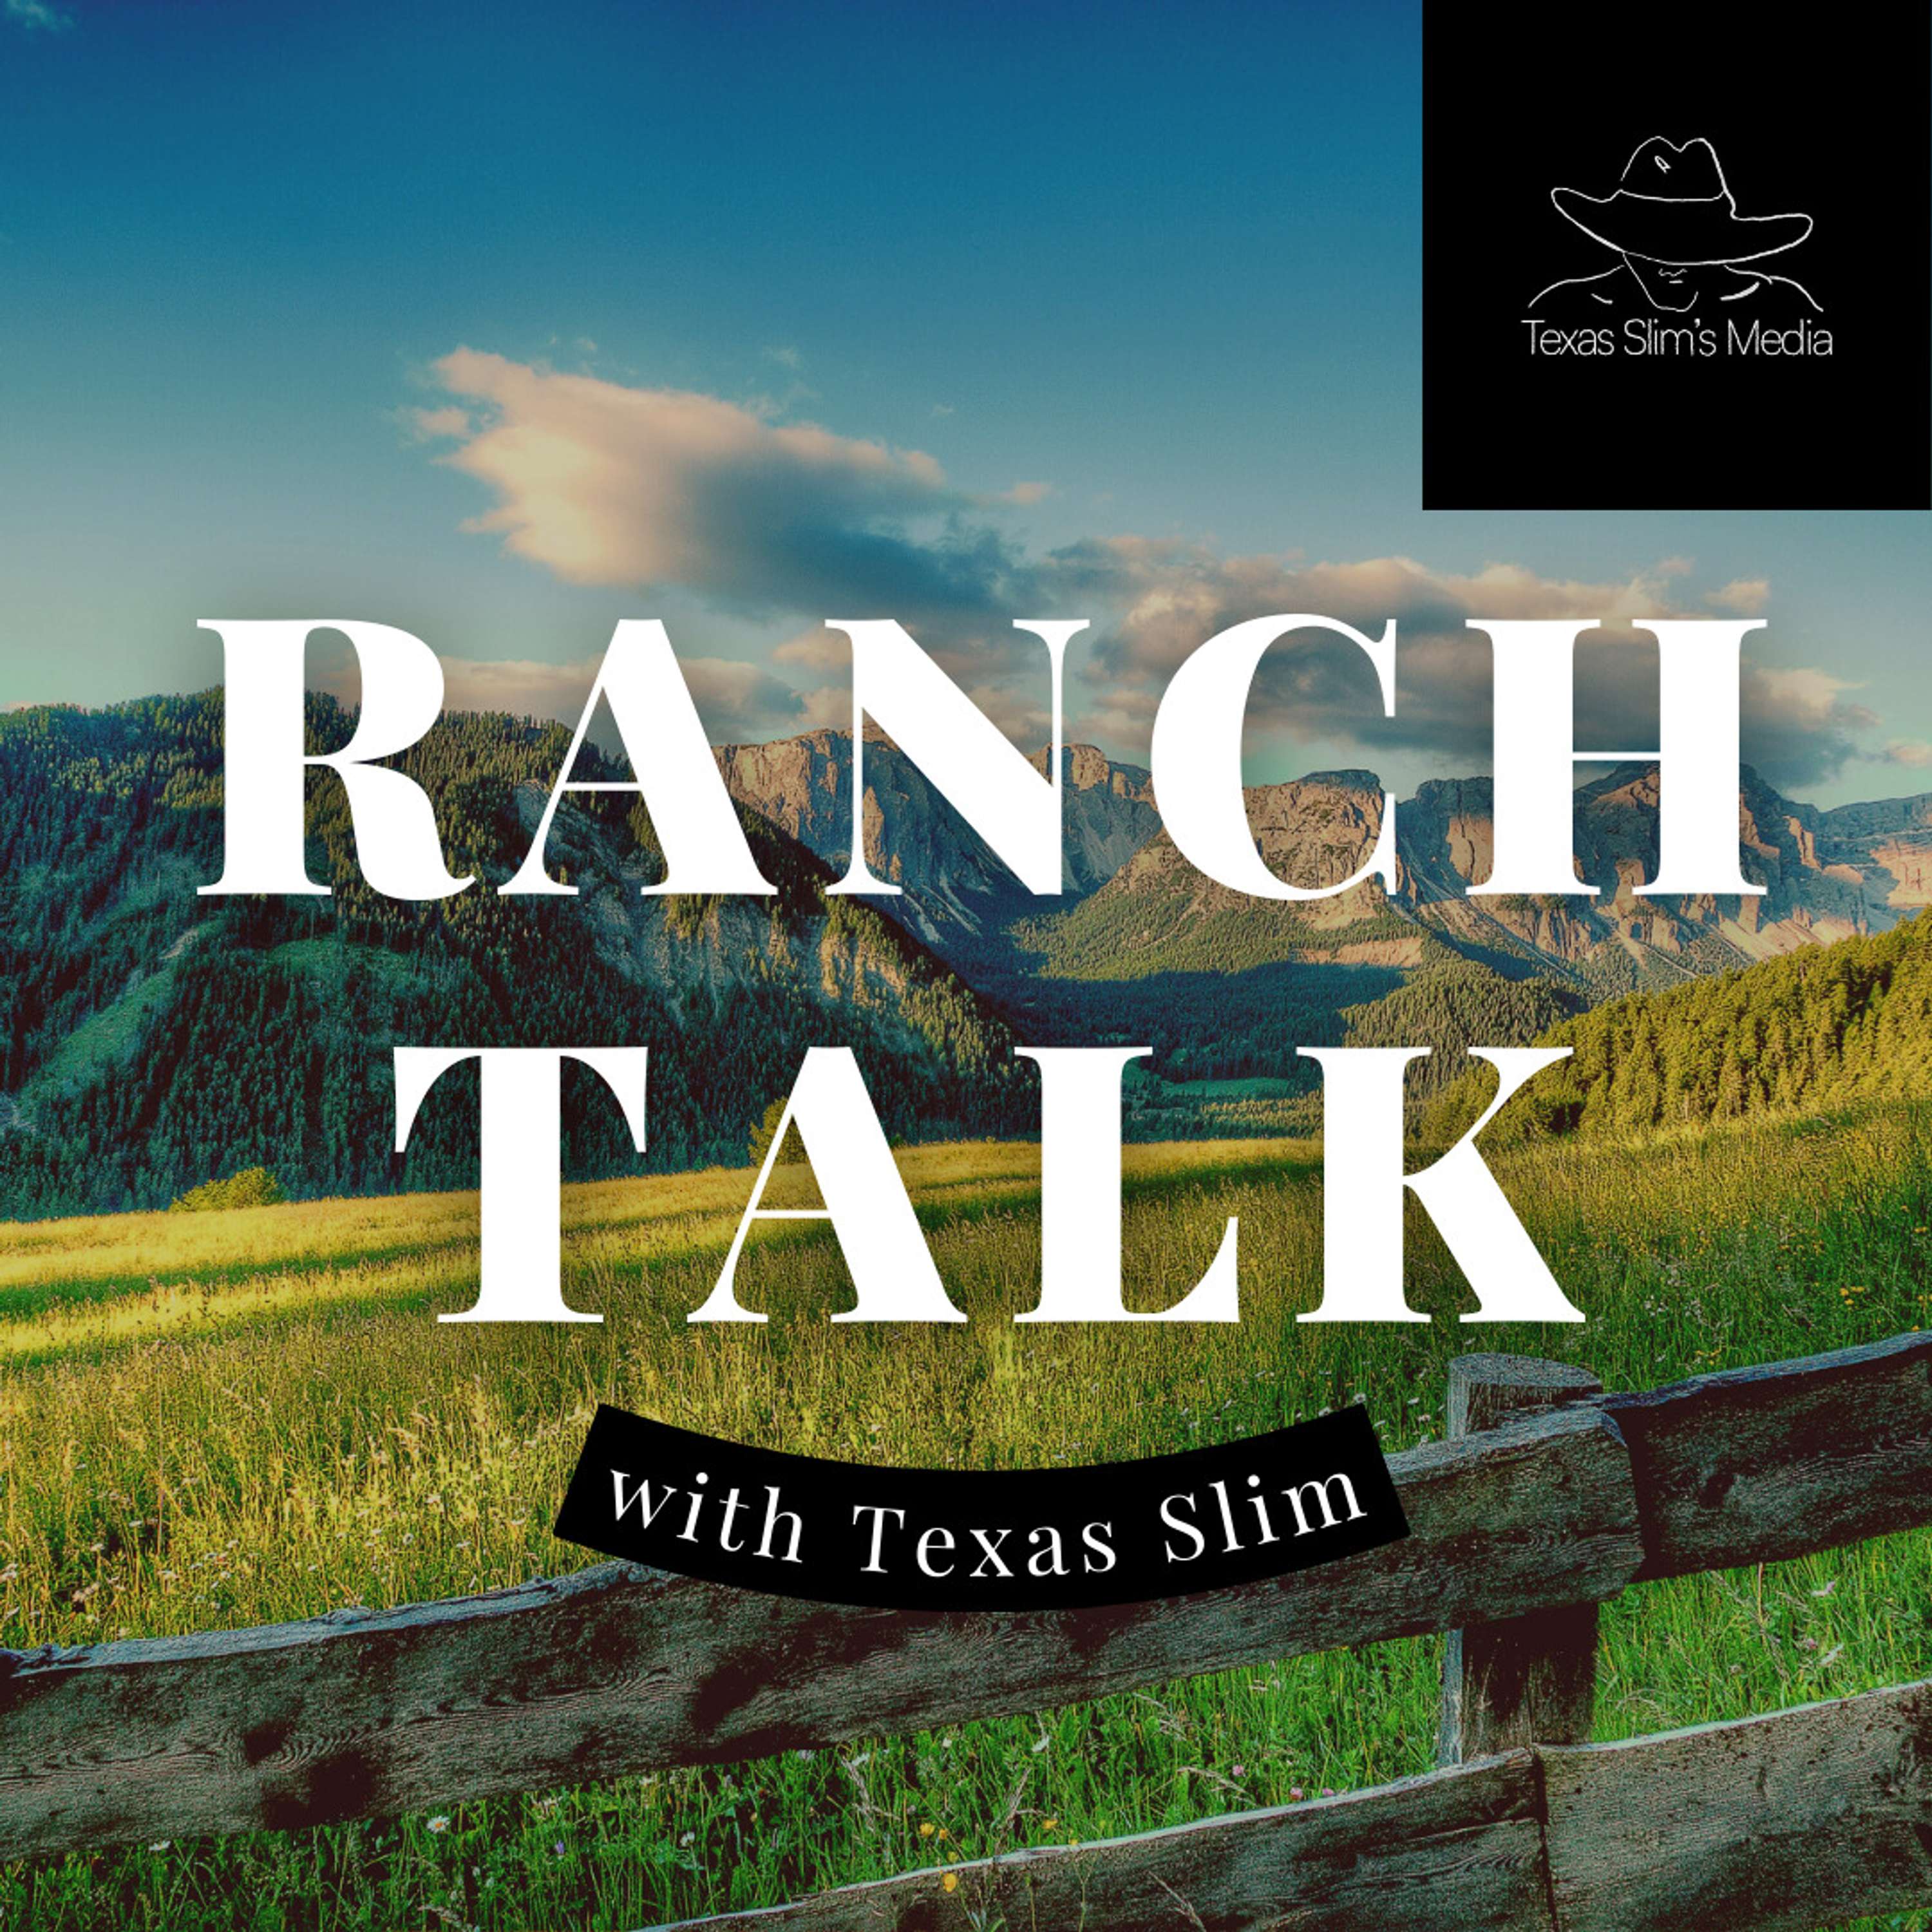 Episode 1- Ranch Talk featuring Jason Wrich